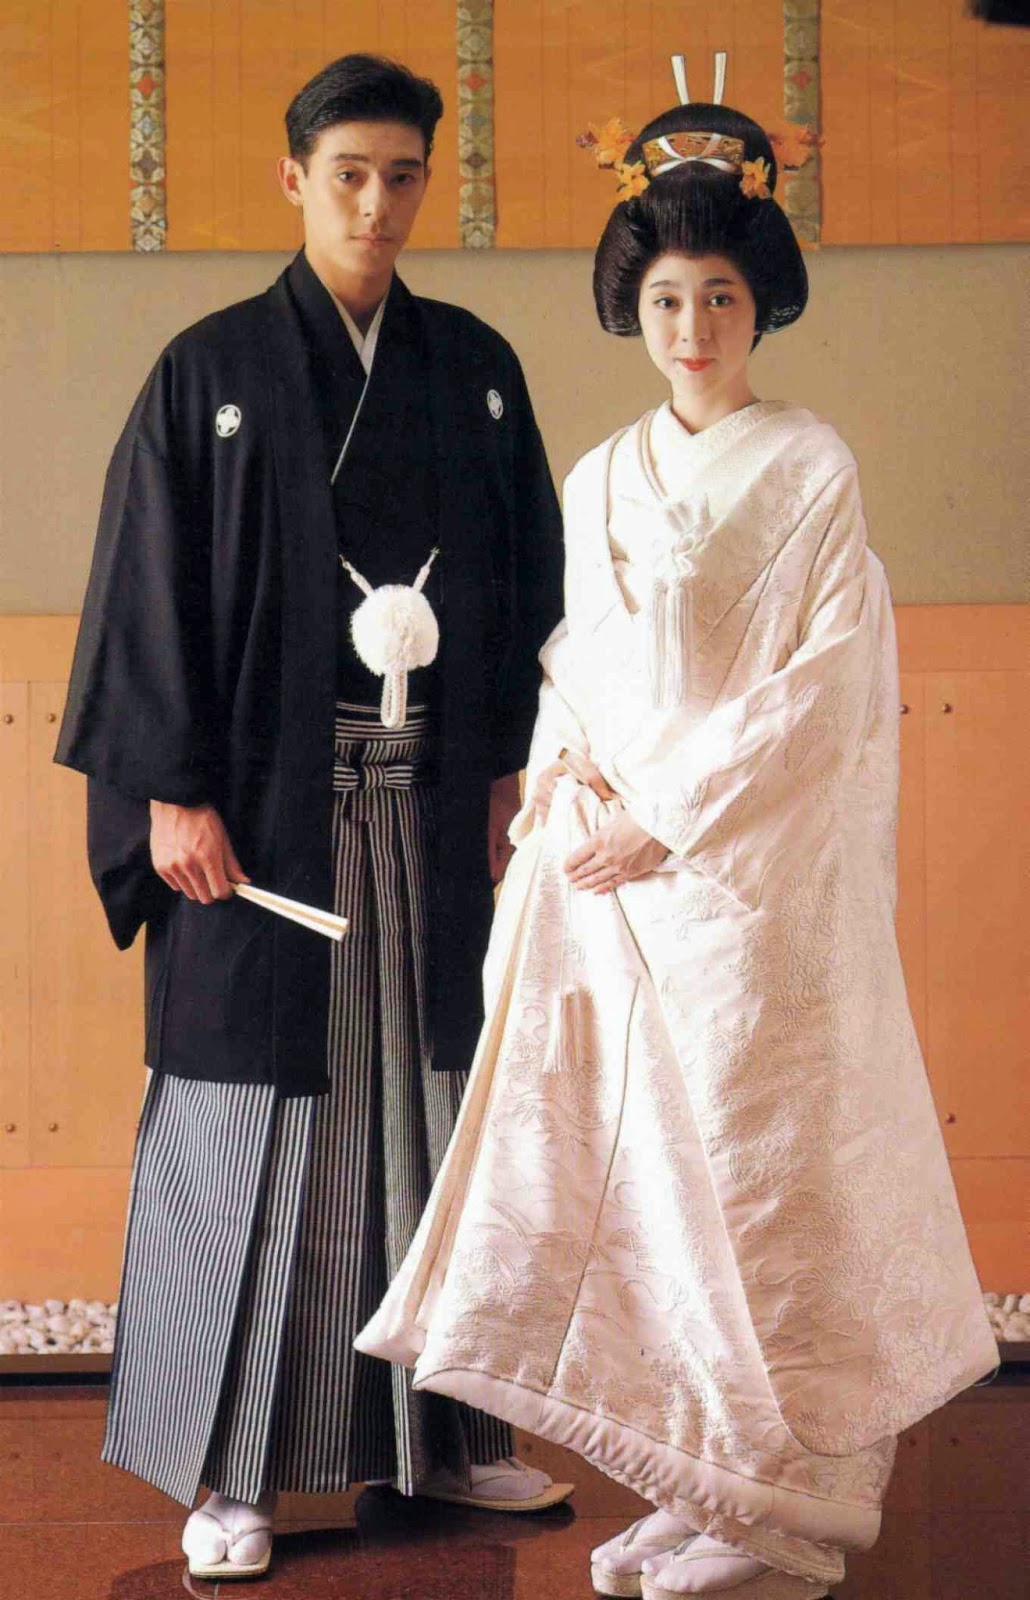 Yusuke Japan Blog: Traditional Japanese wedding ceremony is attractive